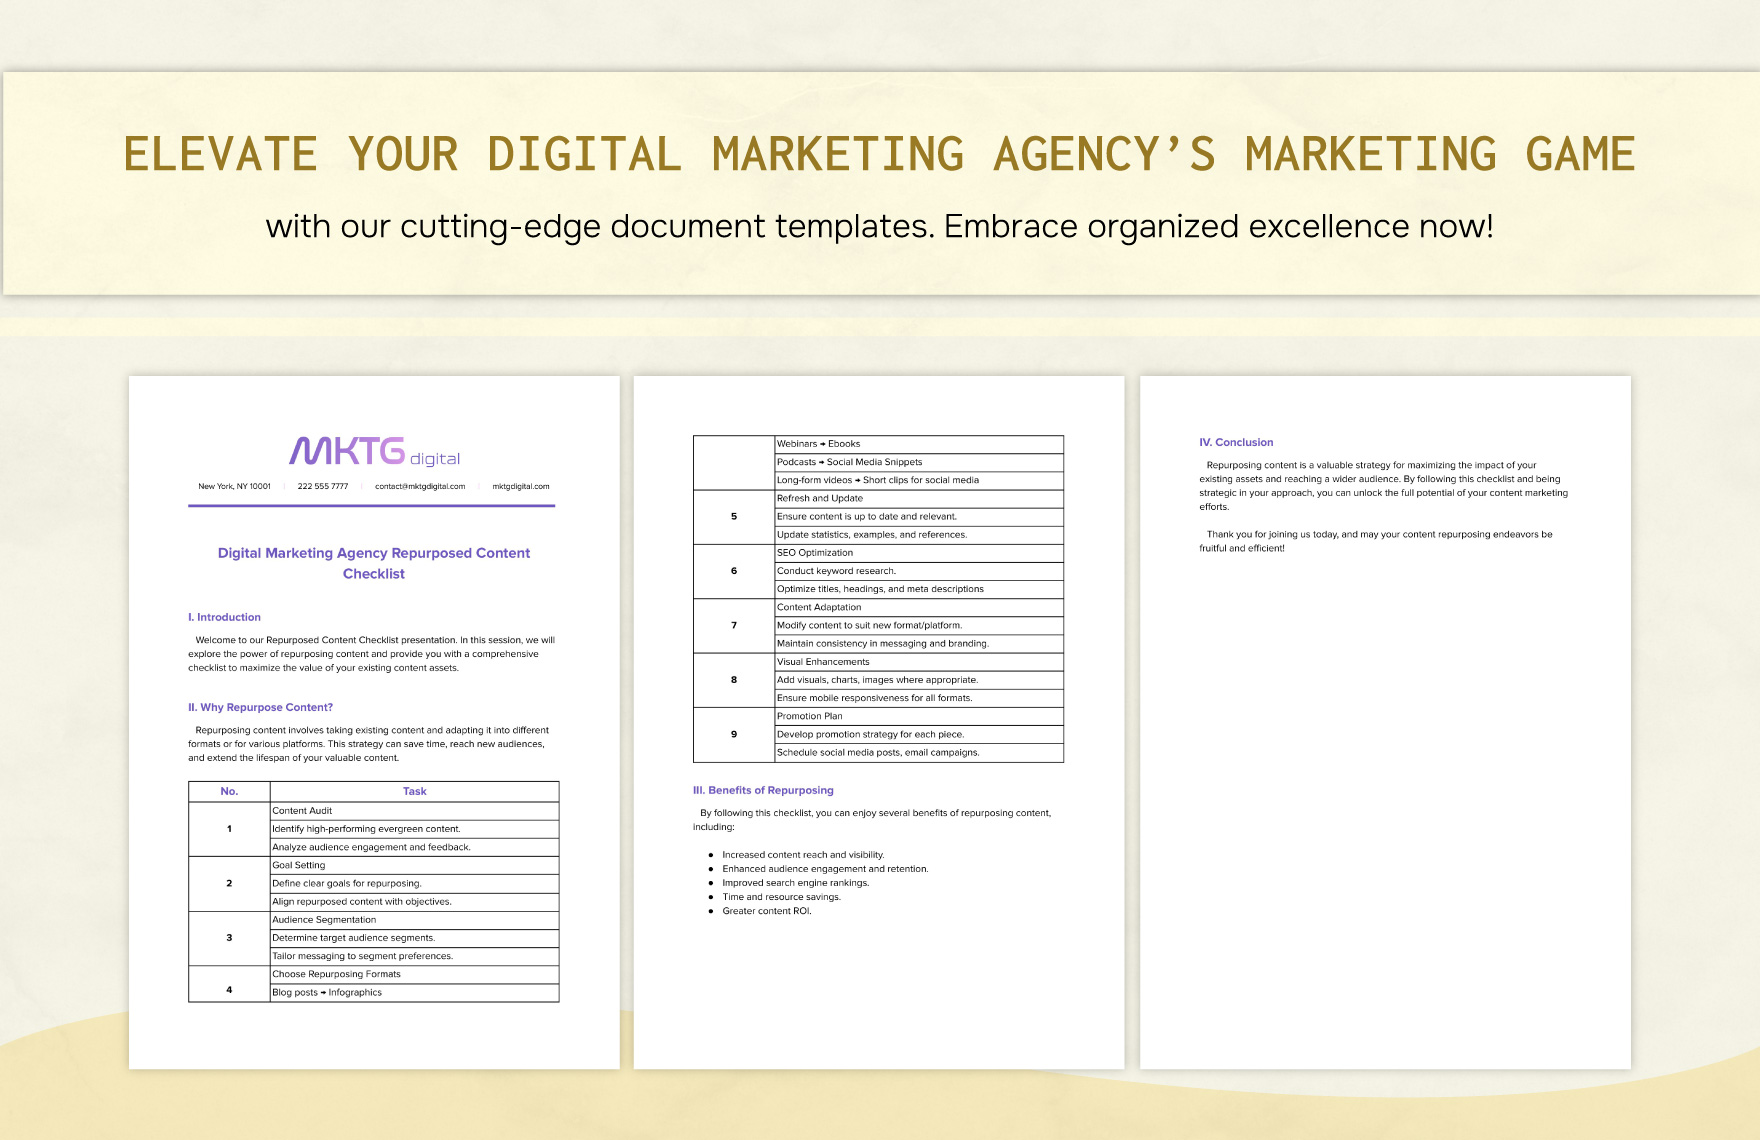 Digital Marketing Agency Repurposed Content Checklist Template